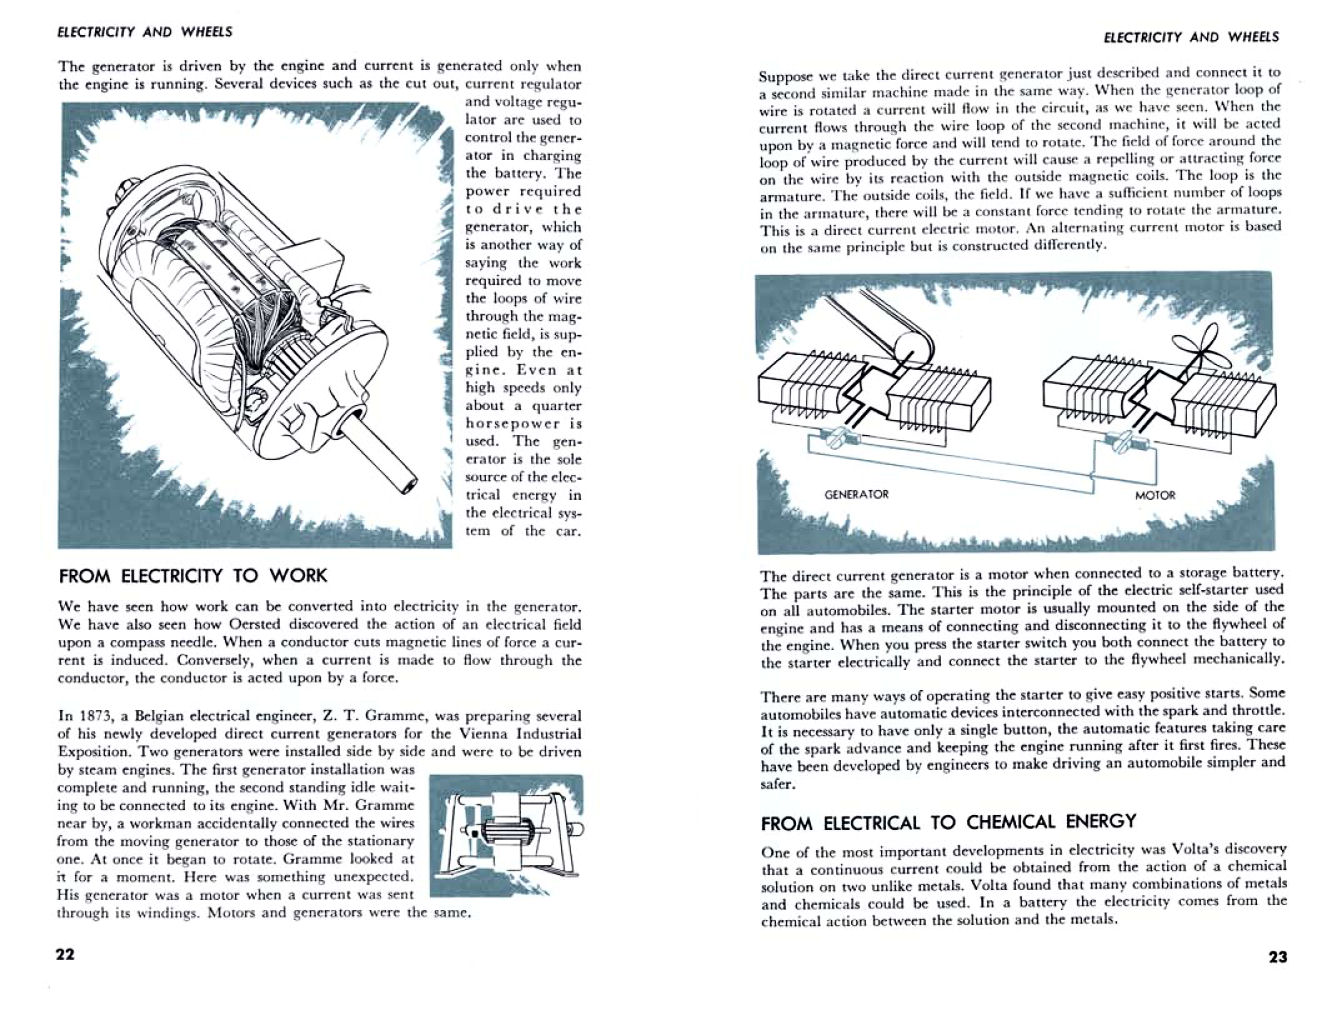 n_1953-Electricity and Wheels-22-23.jpg